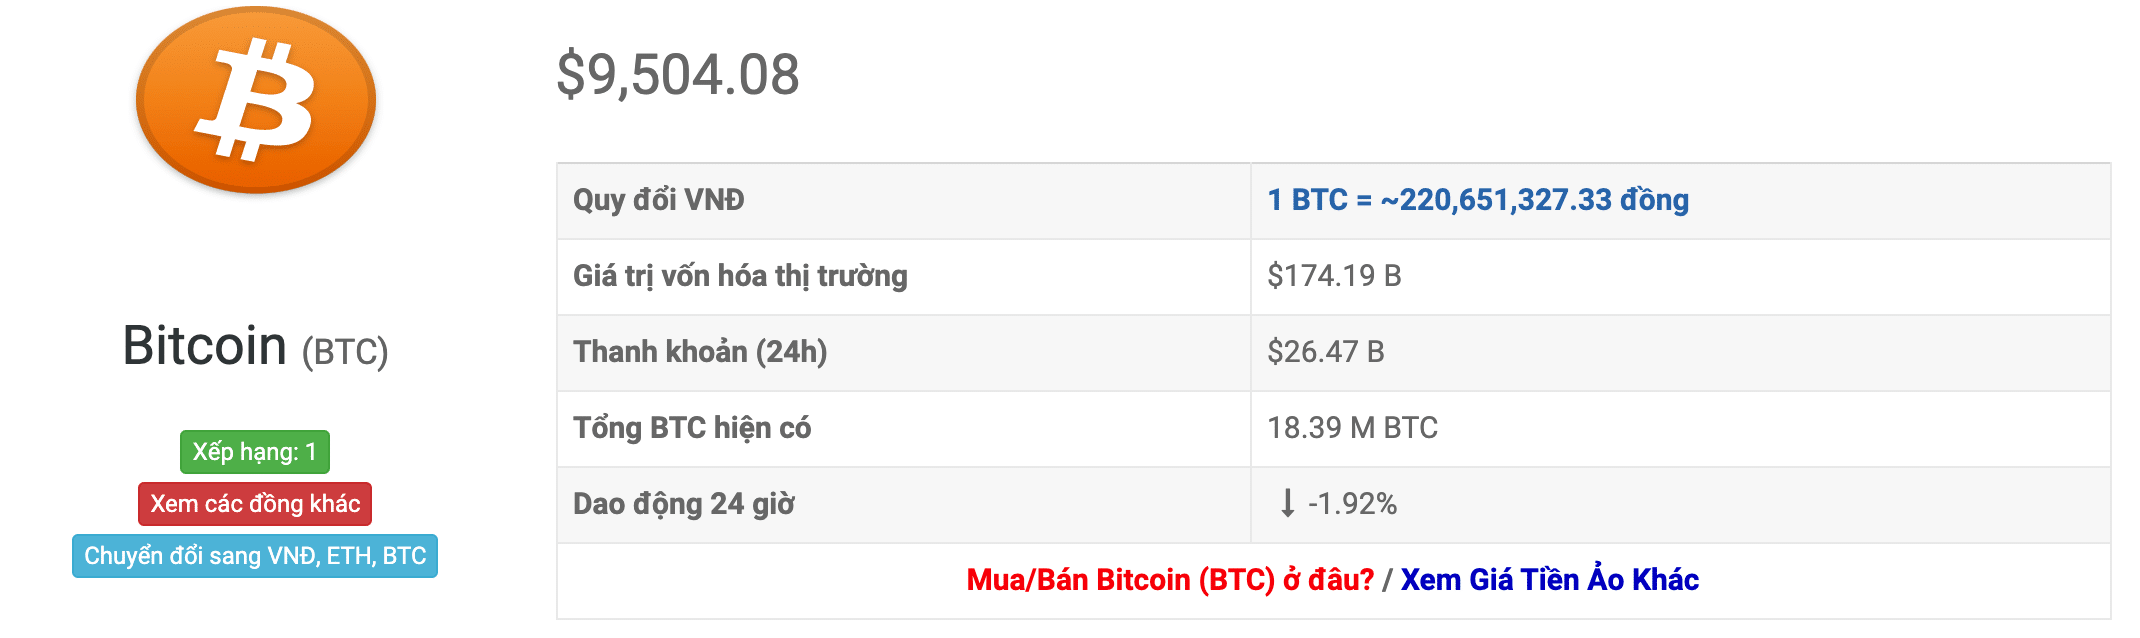 Směnný kurz bitcoinů